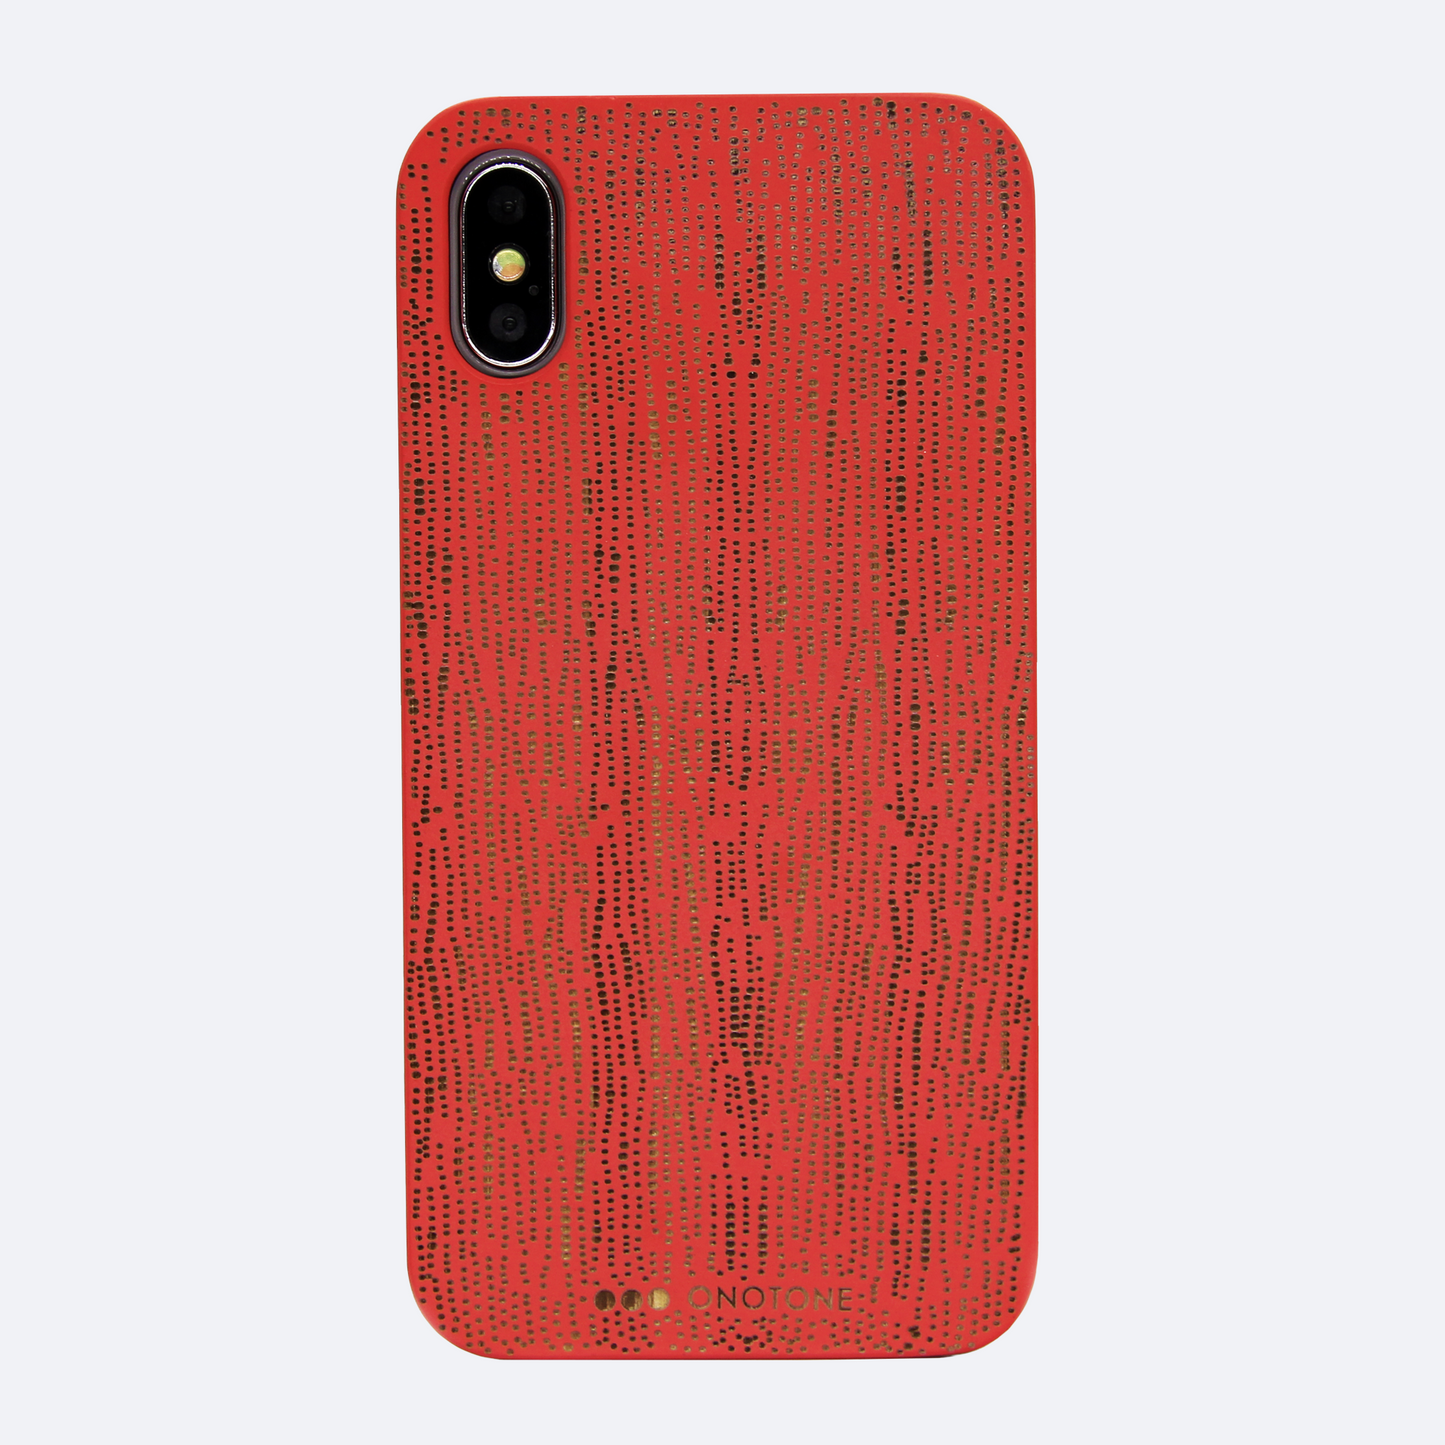 wood-phone-case